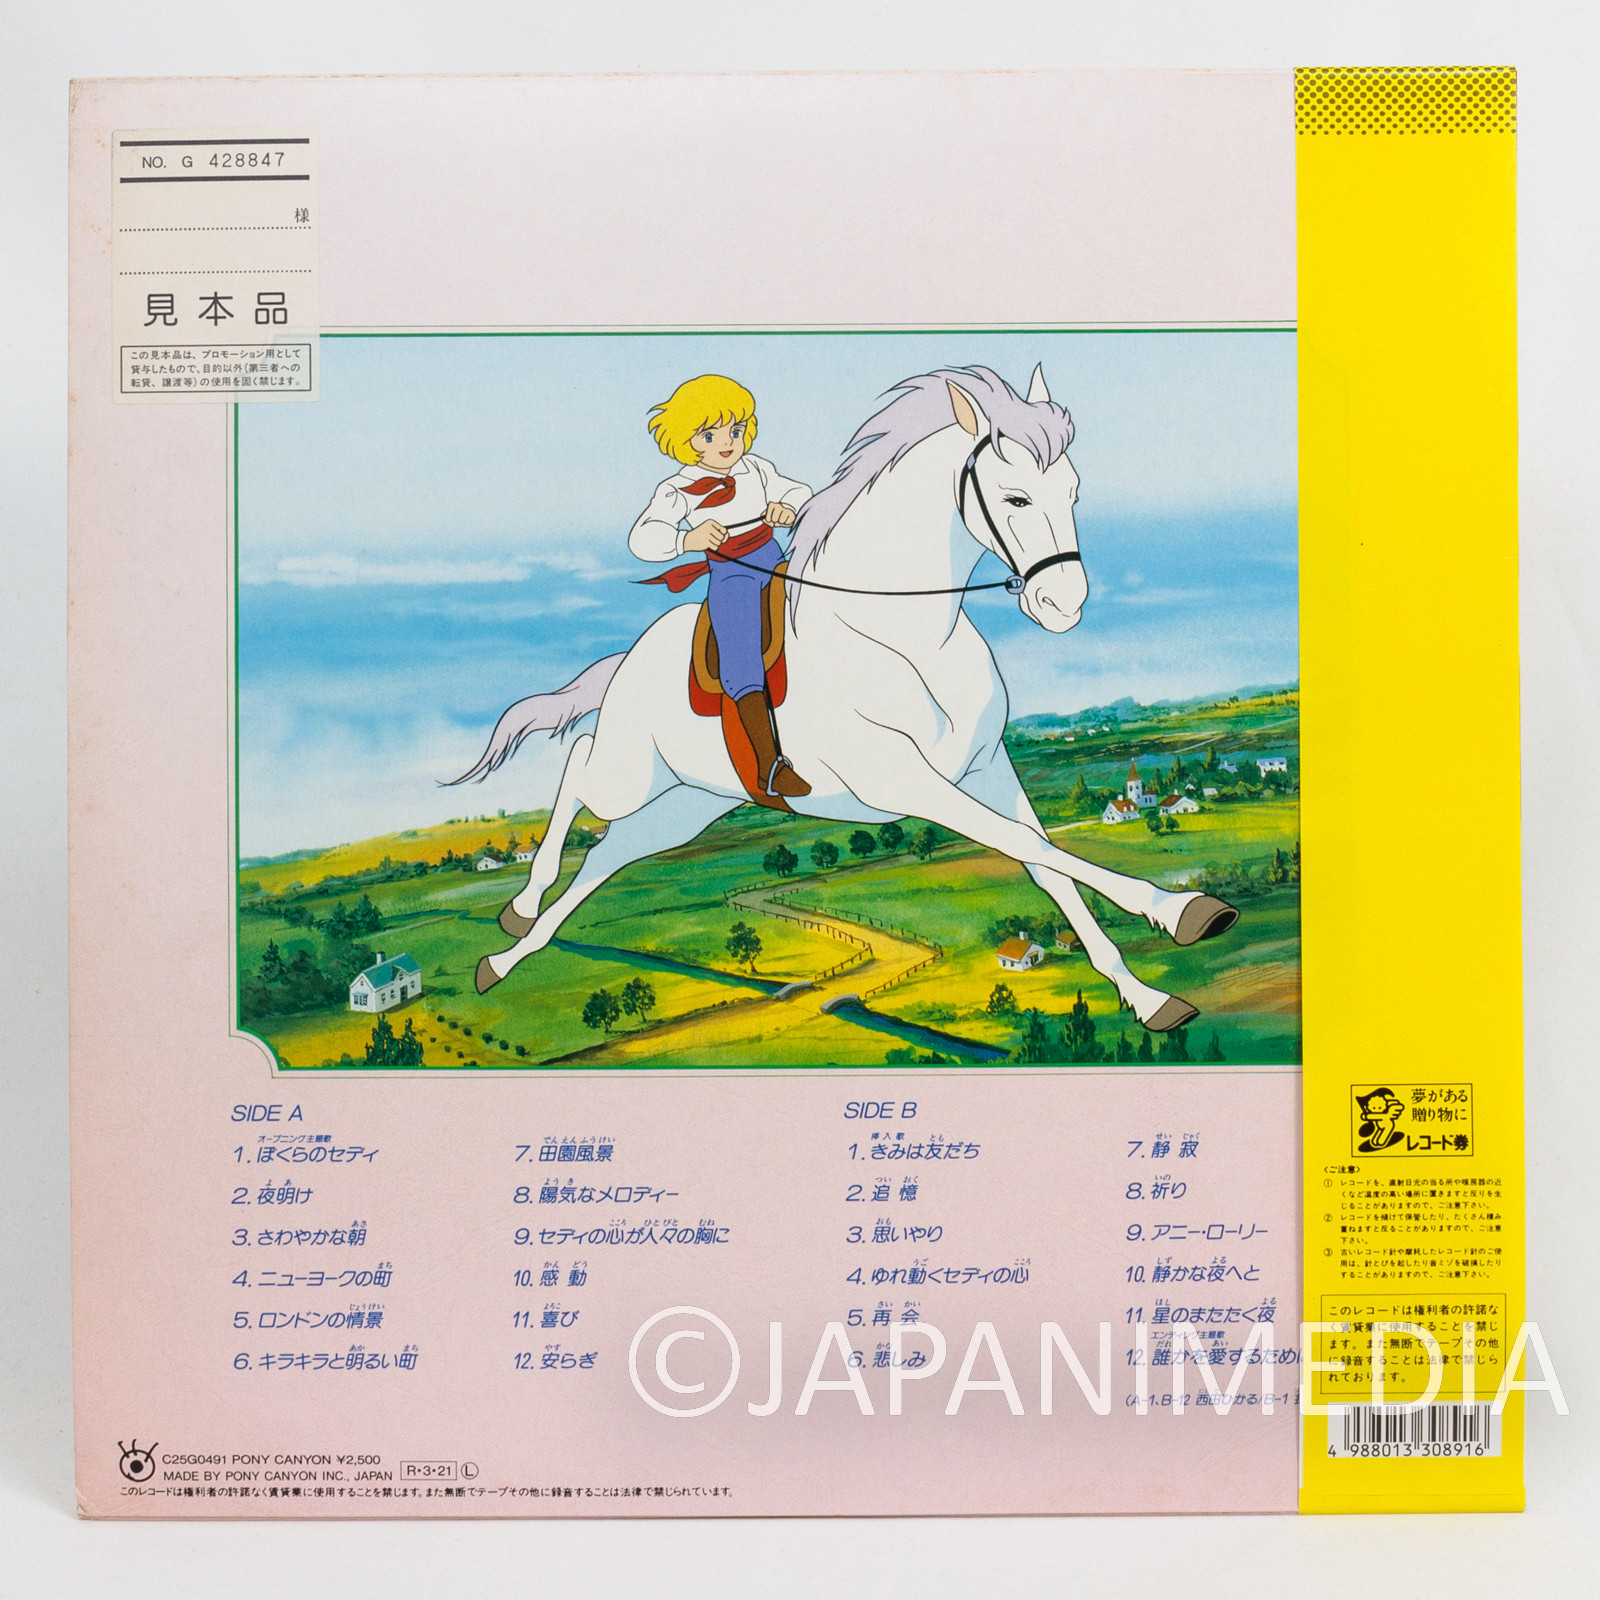 RARE! Little Prince Cedie Music Collection 12" Vinyl LP Record PROMO C25G0491